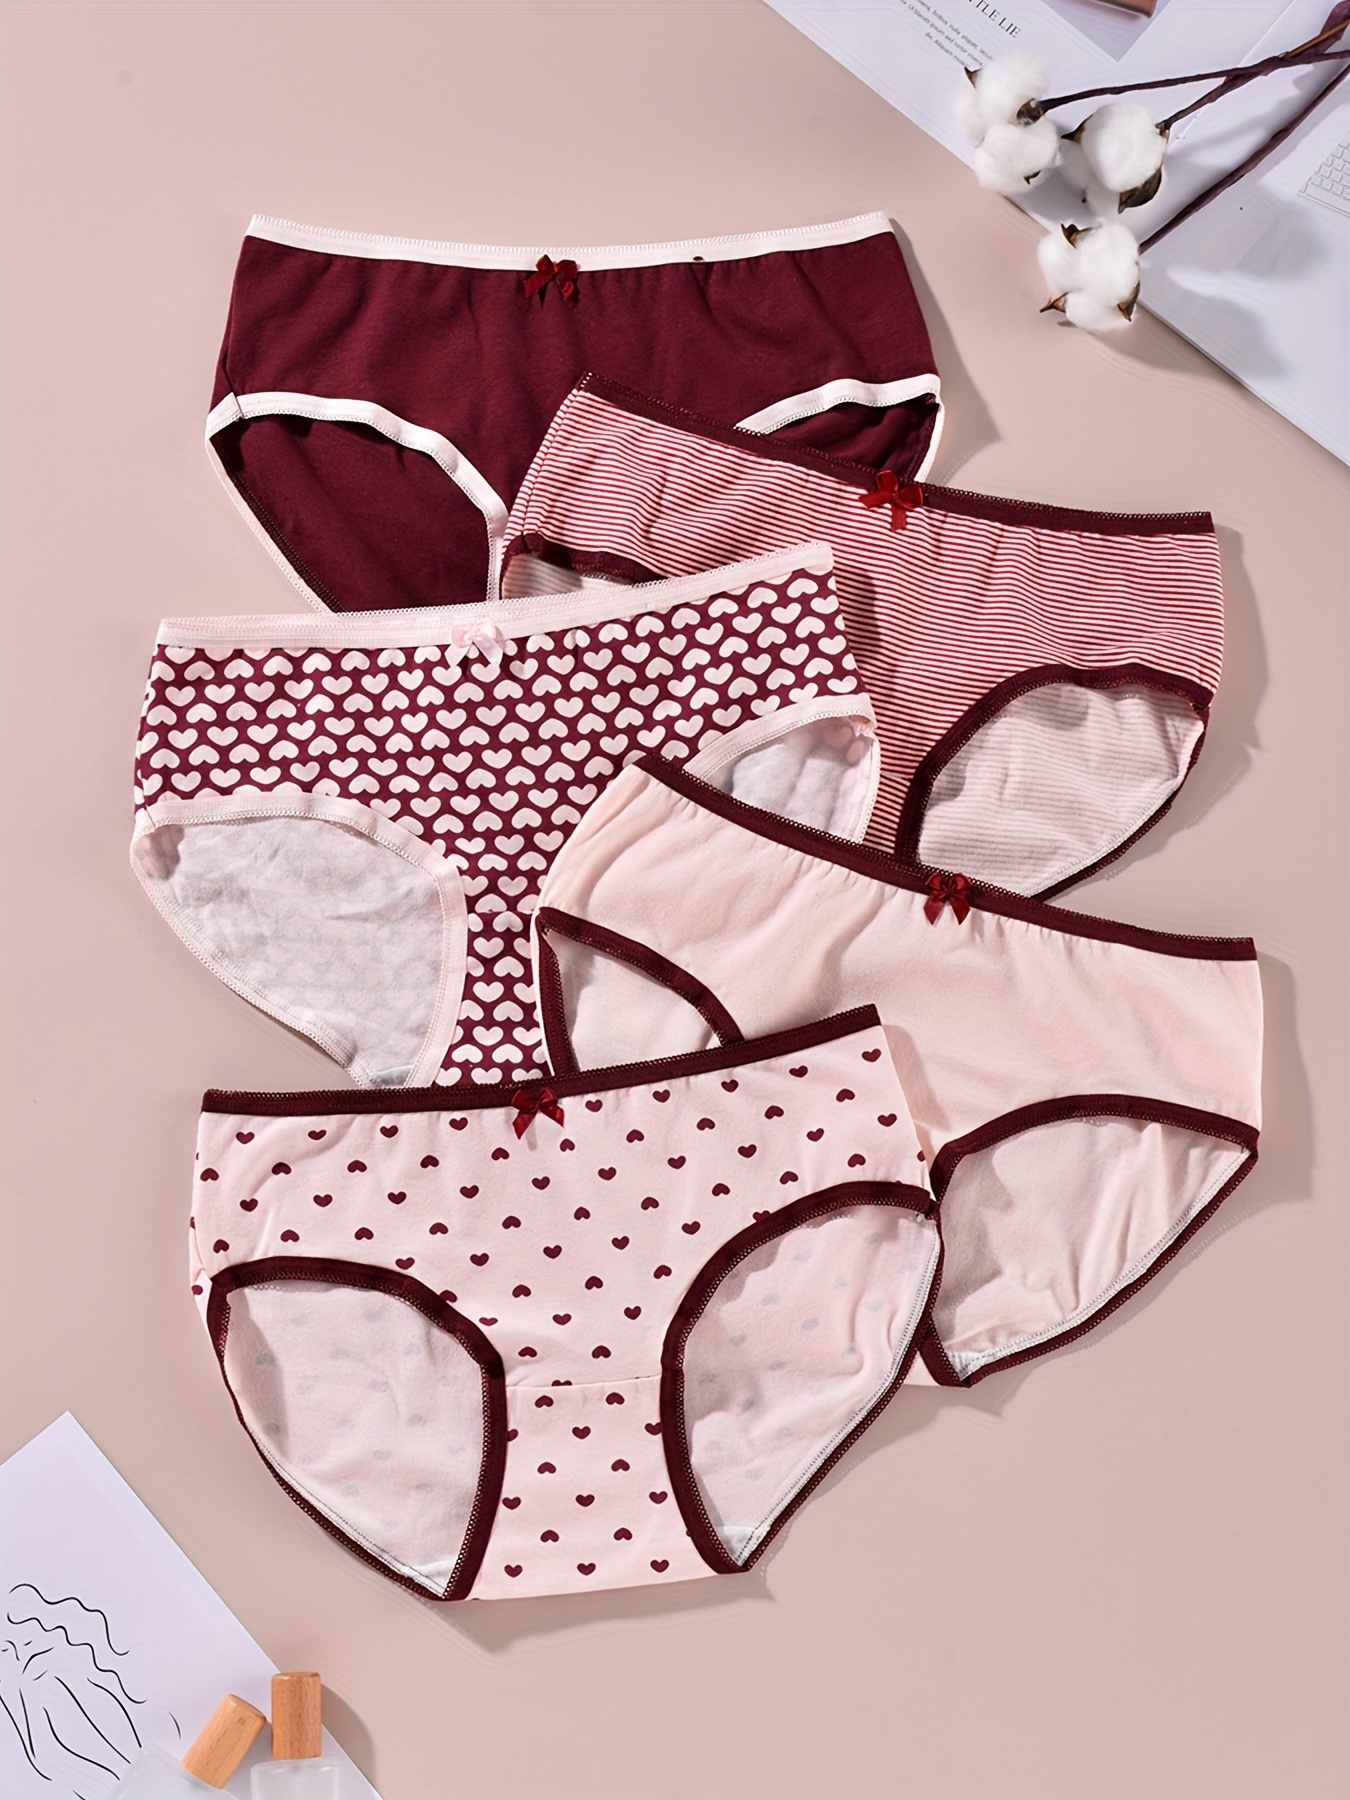 7pcs Heart & Plaid Print Briefs, Comfy & Cute Cartoon Intimates Panties,  Women's Lingerie & Underwear